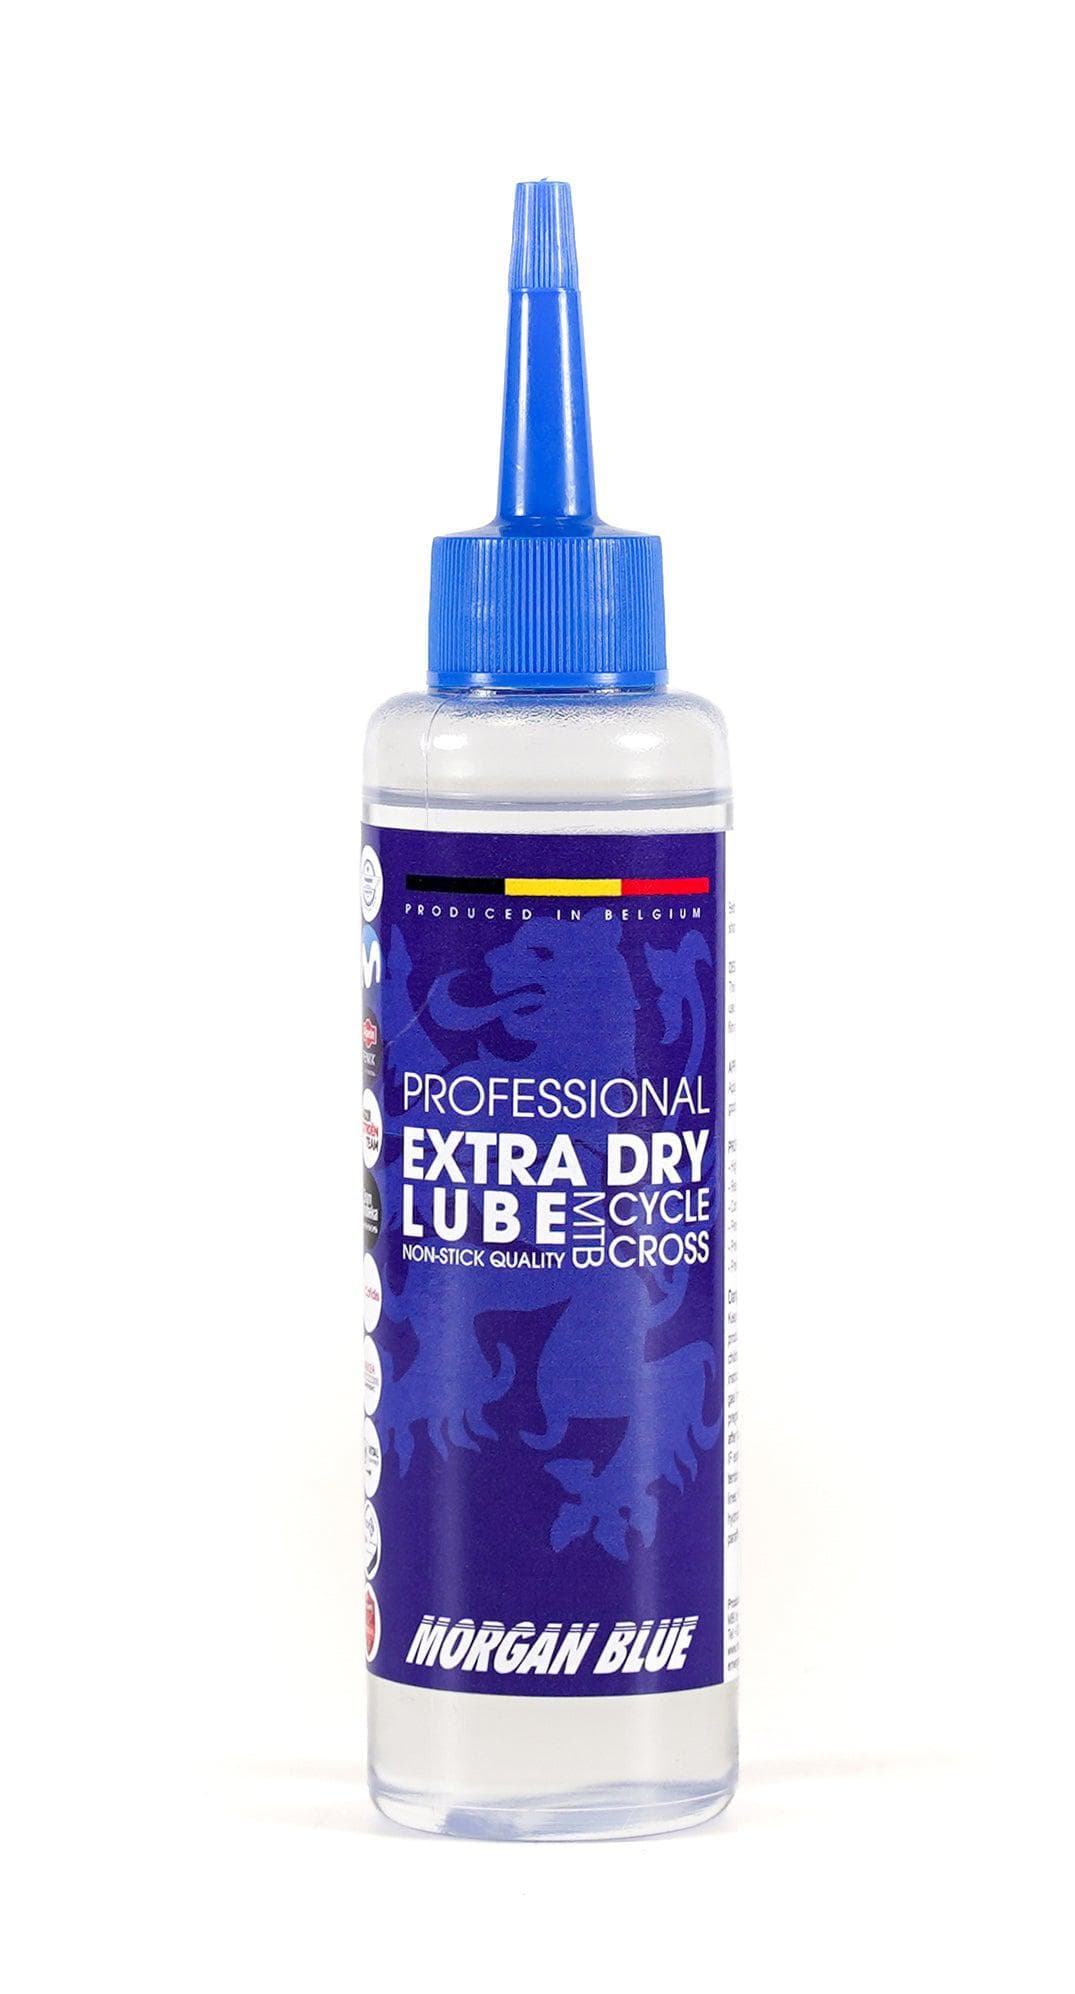 Morgan Blue Extra Dry Lube MTB Cyclo Cross (125cc, Bottle)